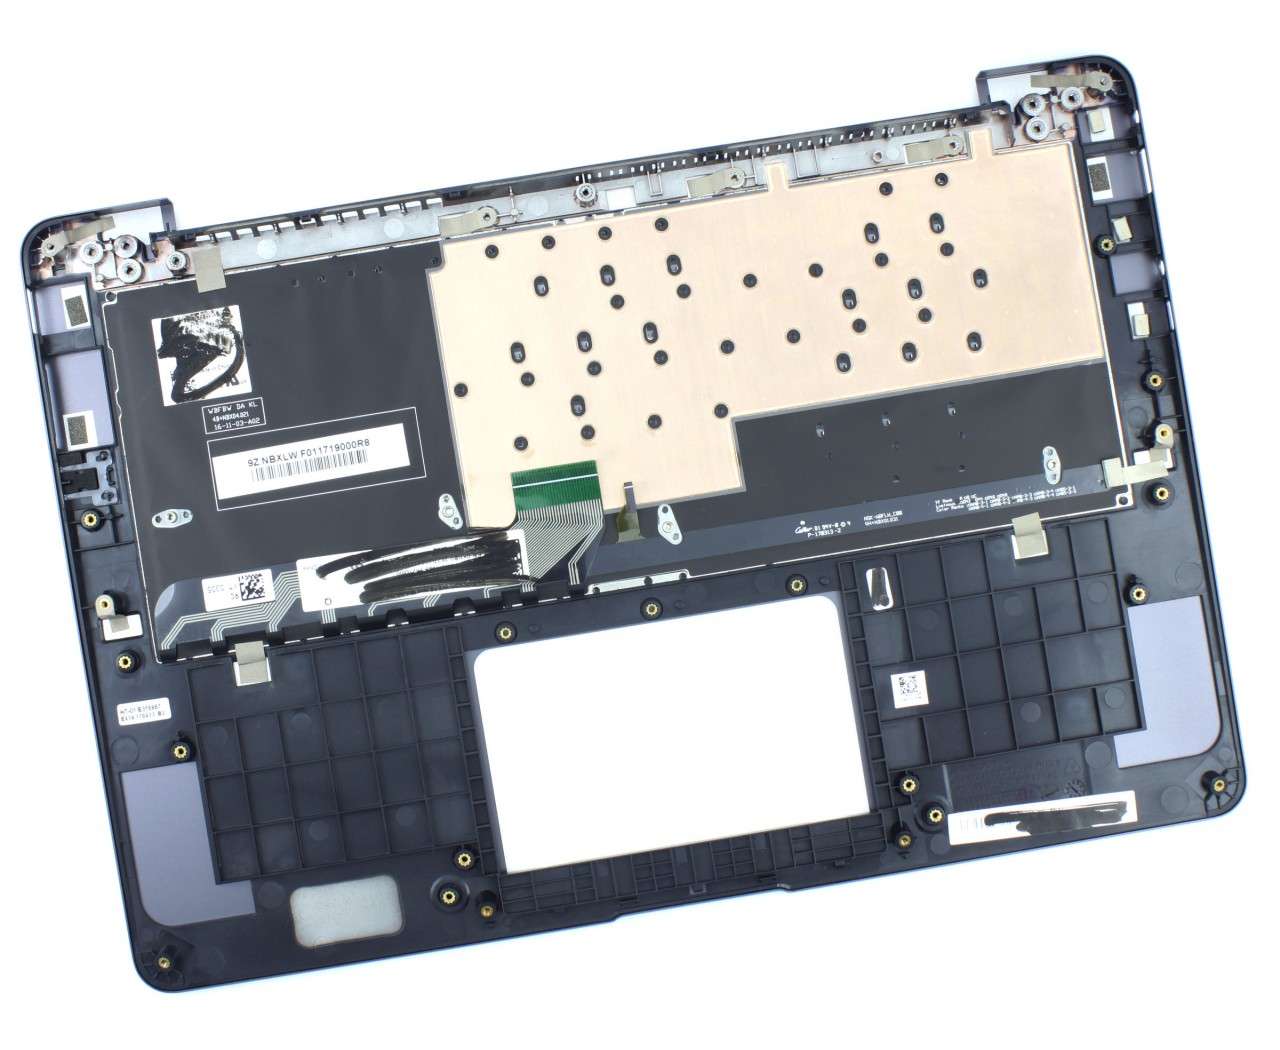 Tastatura Asus ZenBook UX3400UA Neagra cu Palmrest Gri iluminata backlit